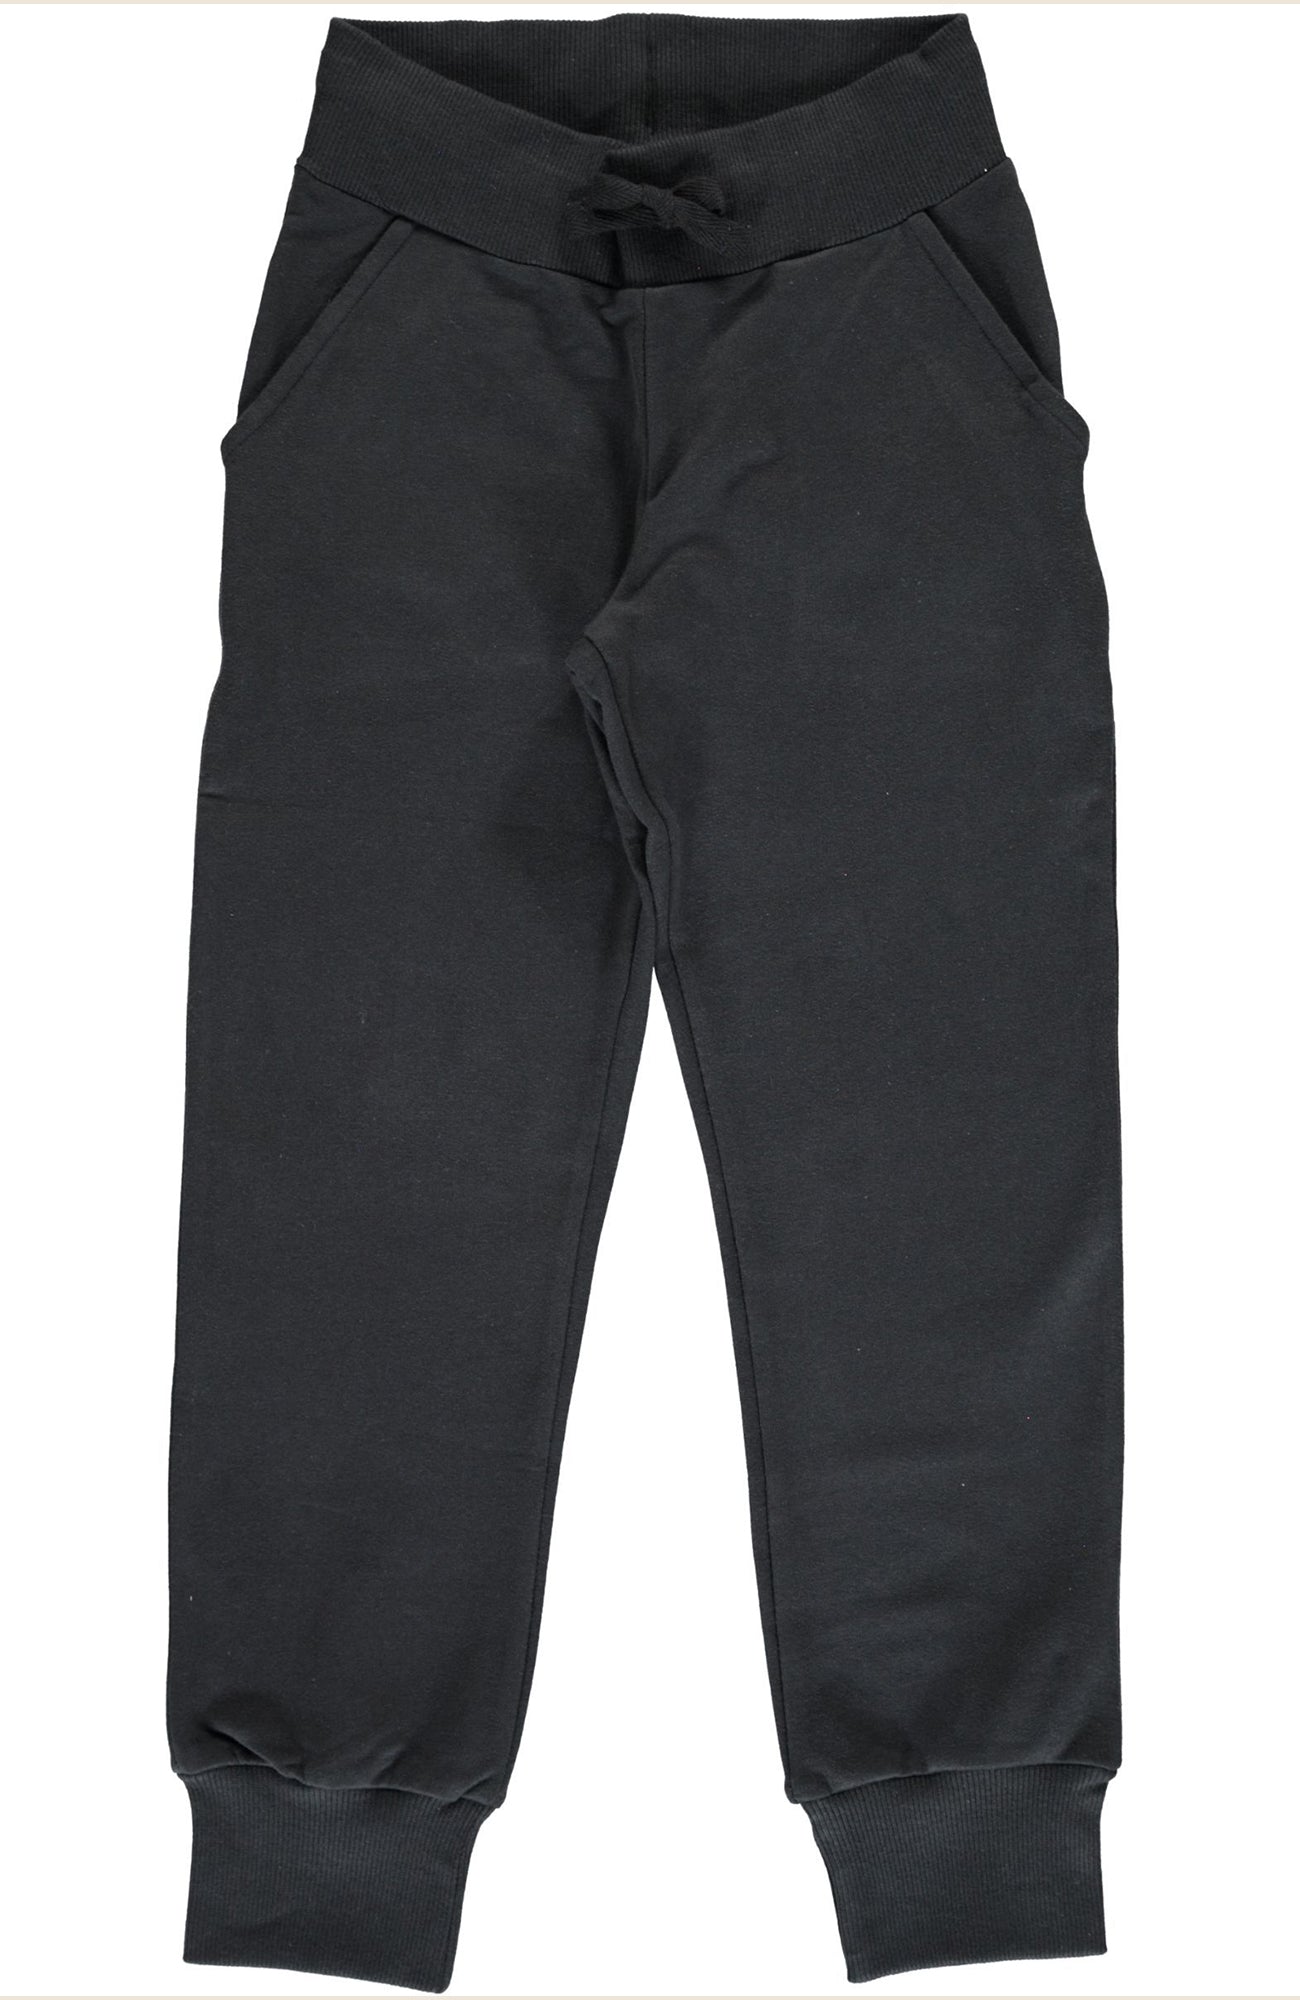 Children's Black Sweatpants - Maxomorra (Last Available)